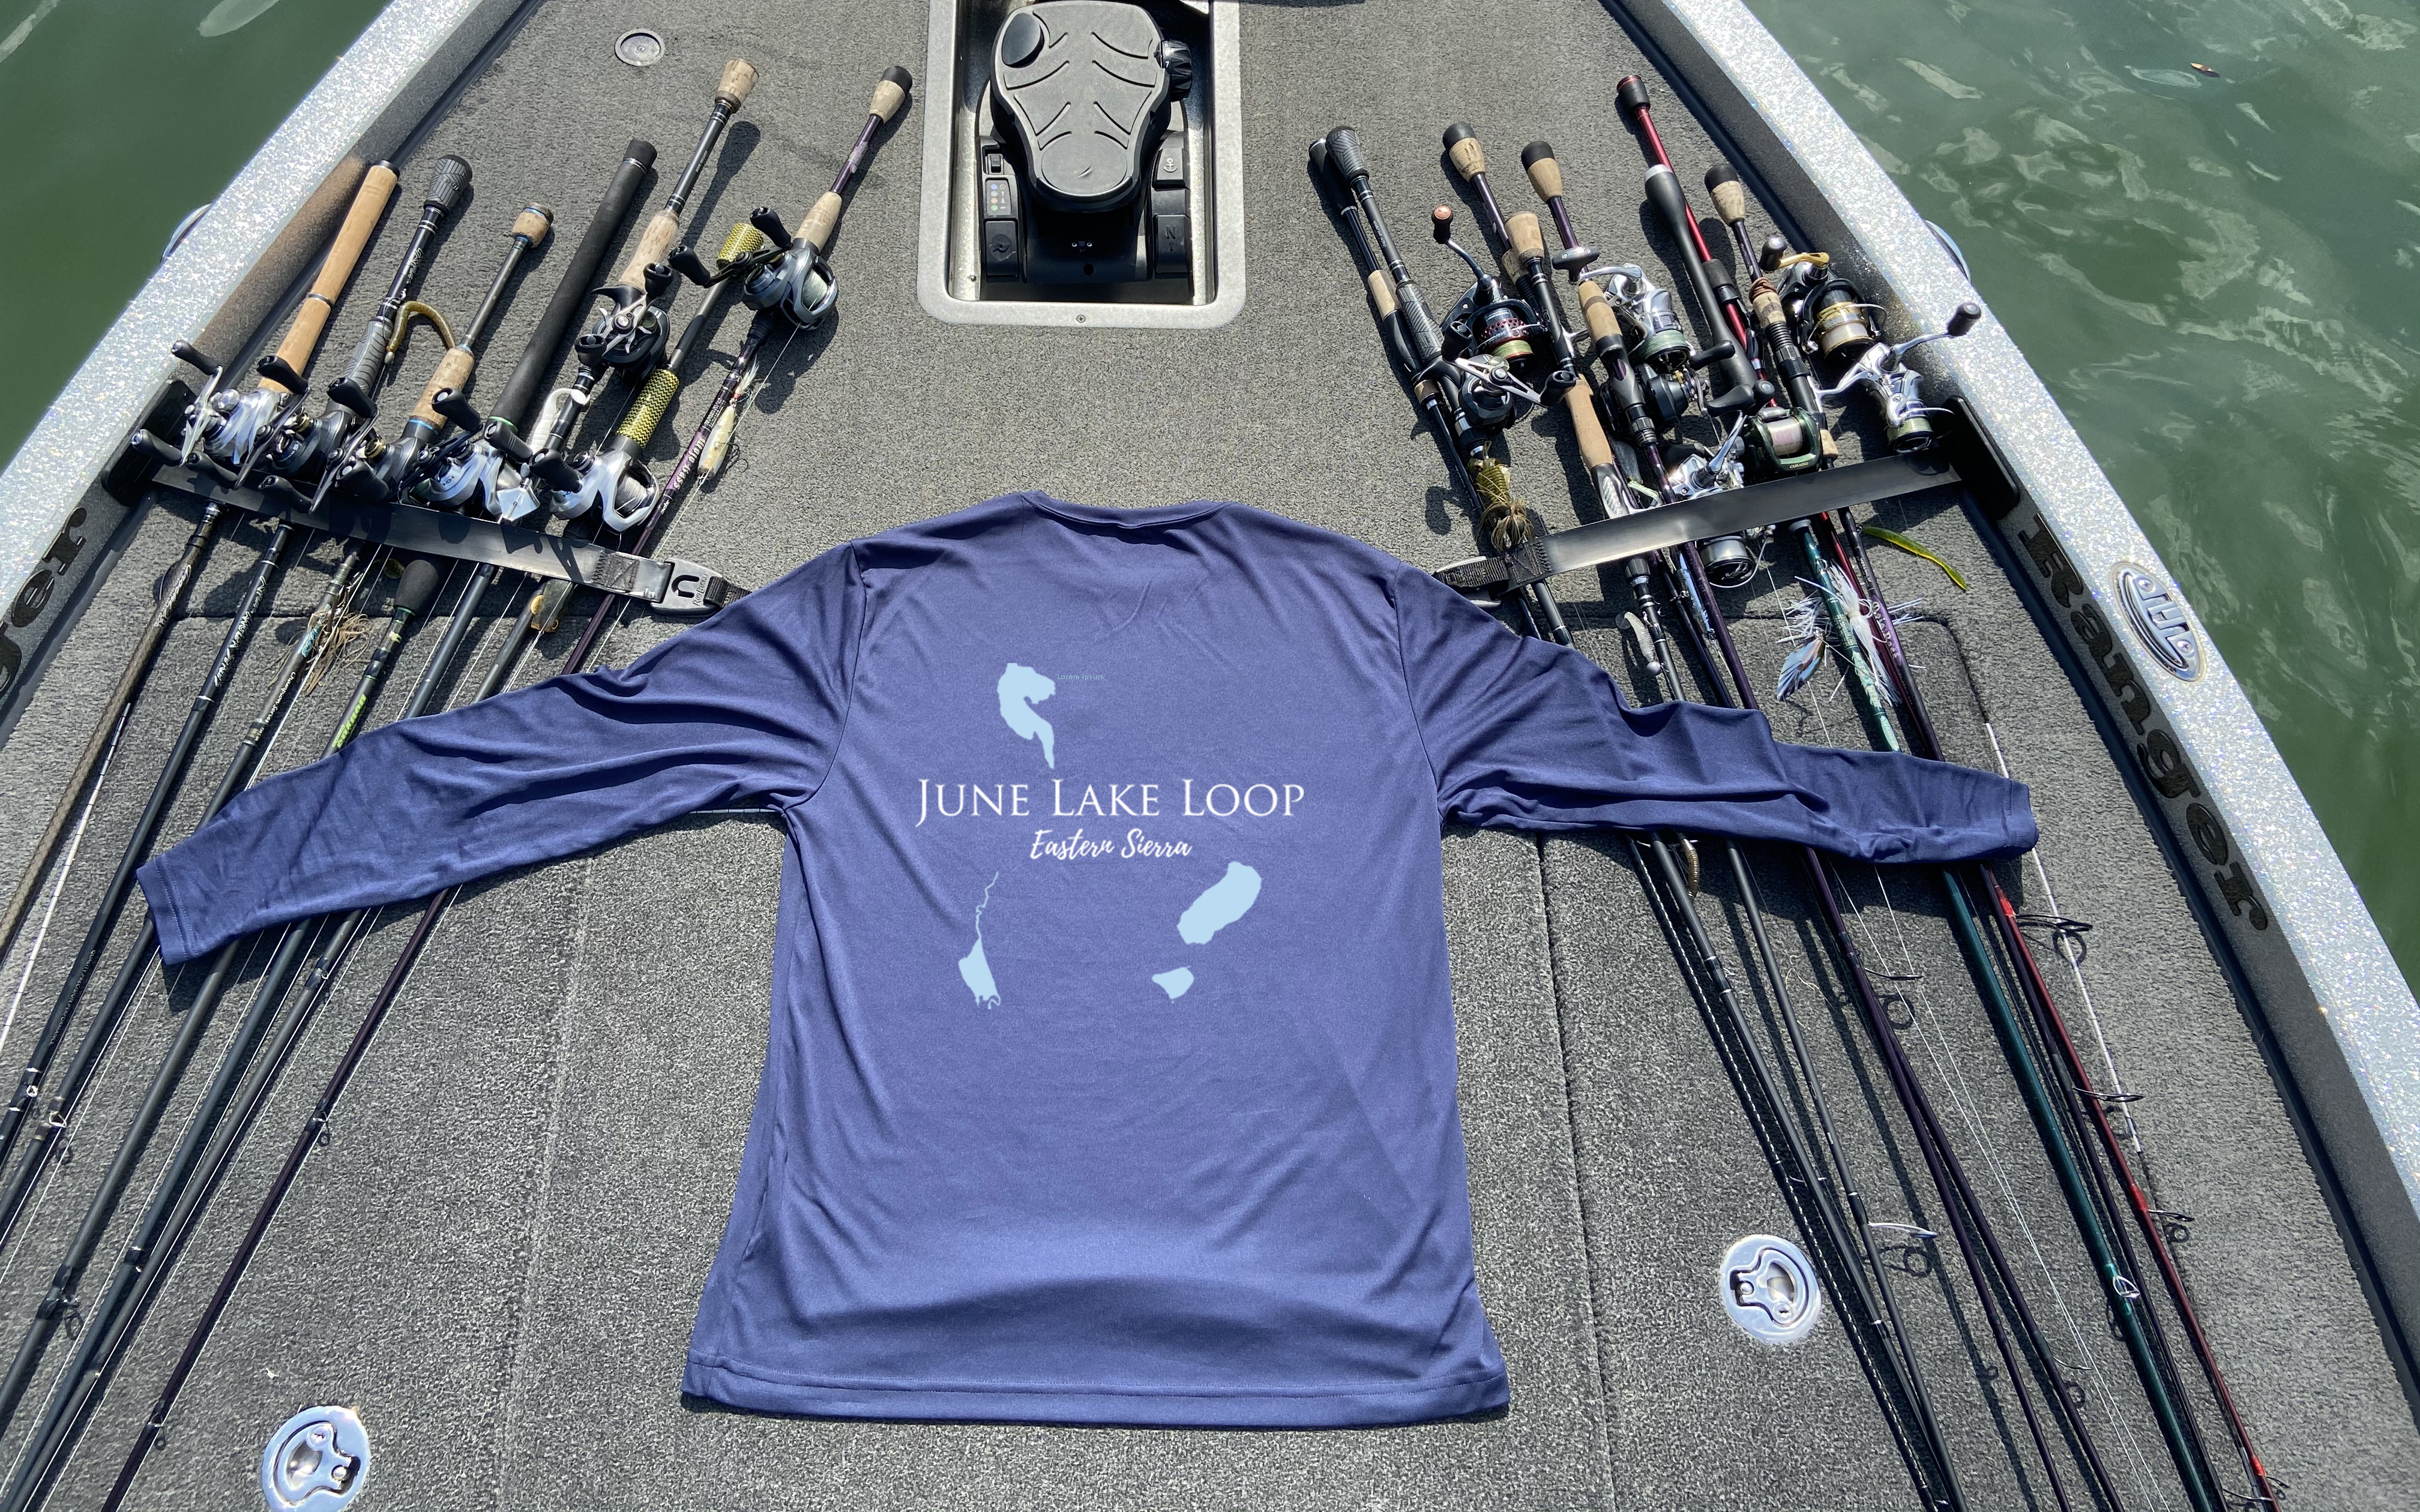 June lake Loop - Easter Sierras Dri-fit Boating Shirt - Breathable Material- Men's Long Sleeve Moisture Wicking Tee - California Lake